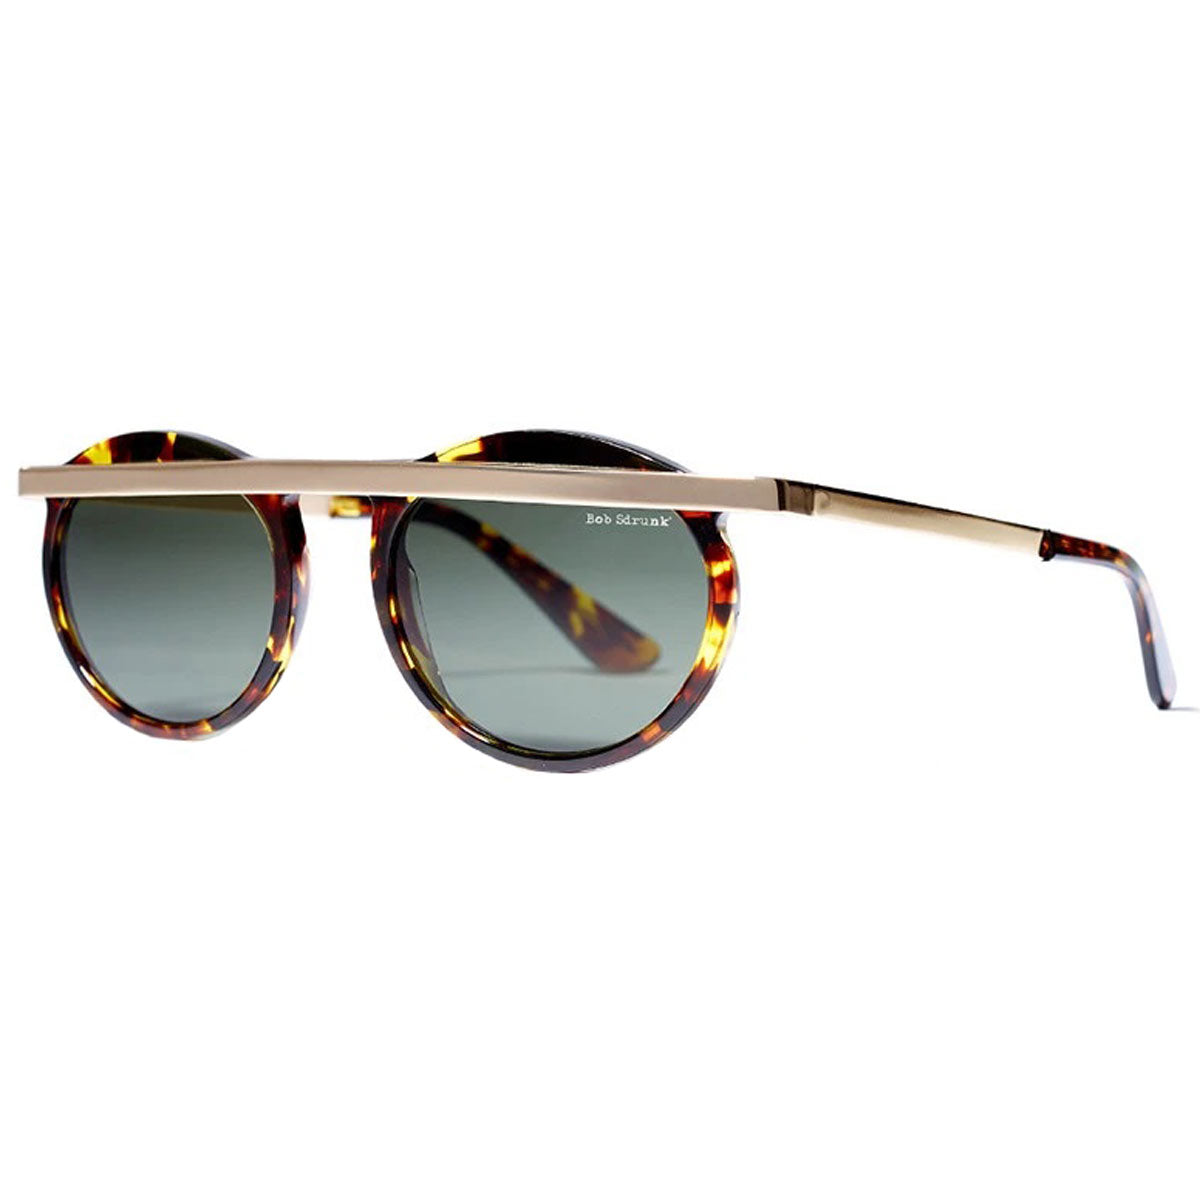 Bob Sdrunk Women's Sunglasses - Nippa Tortoise and Gold Frame / NIPPA-02-41-19-140